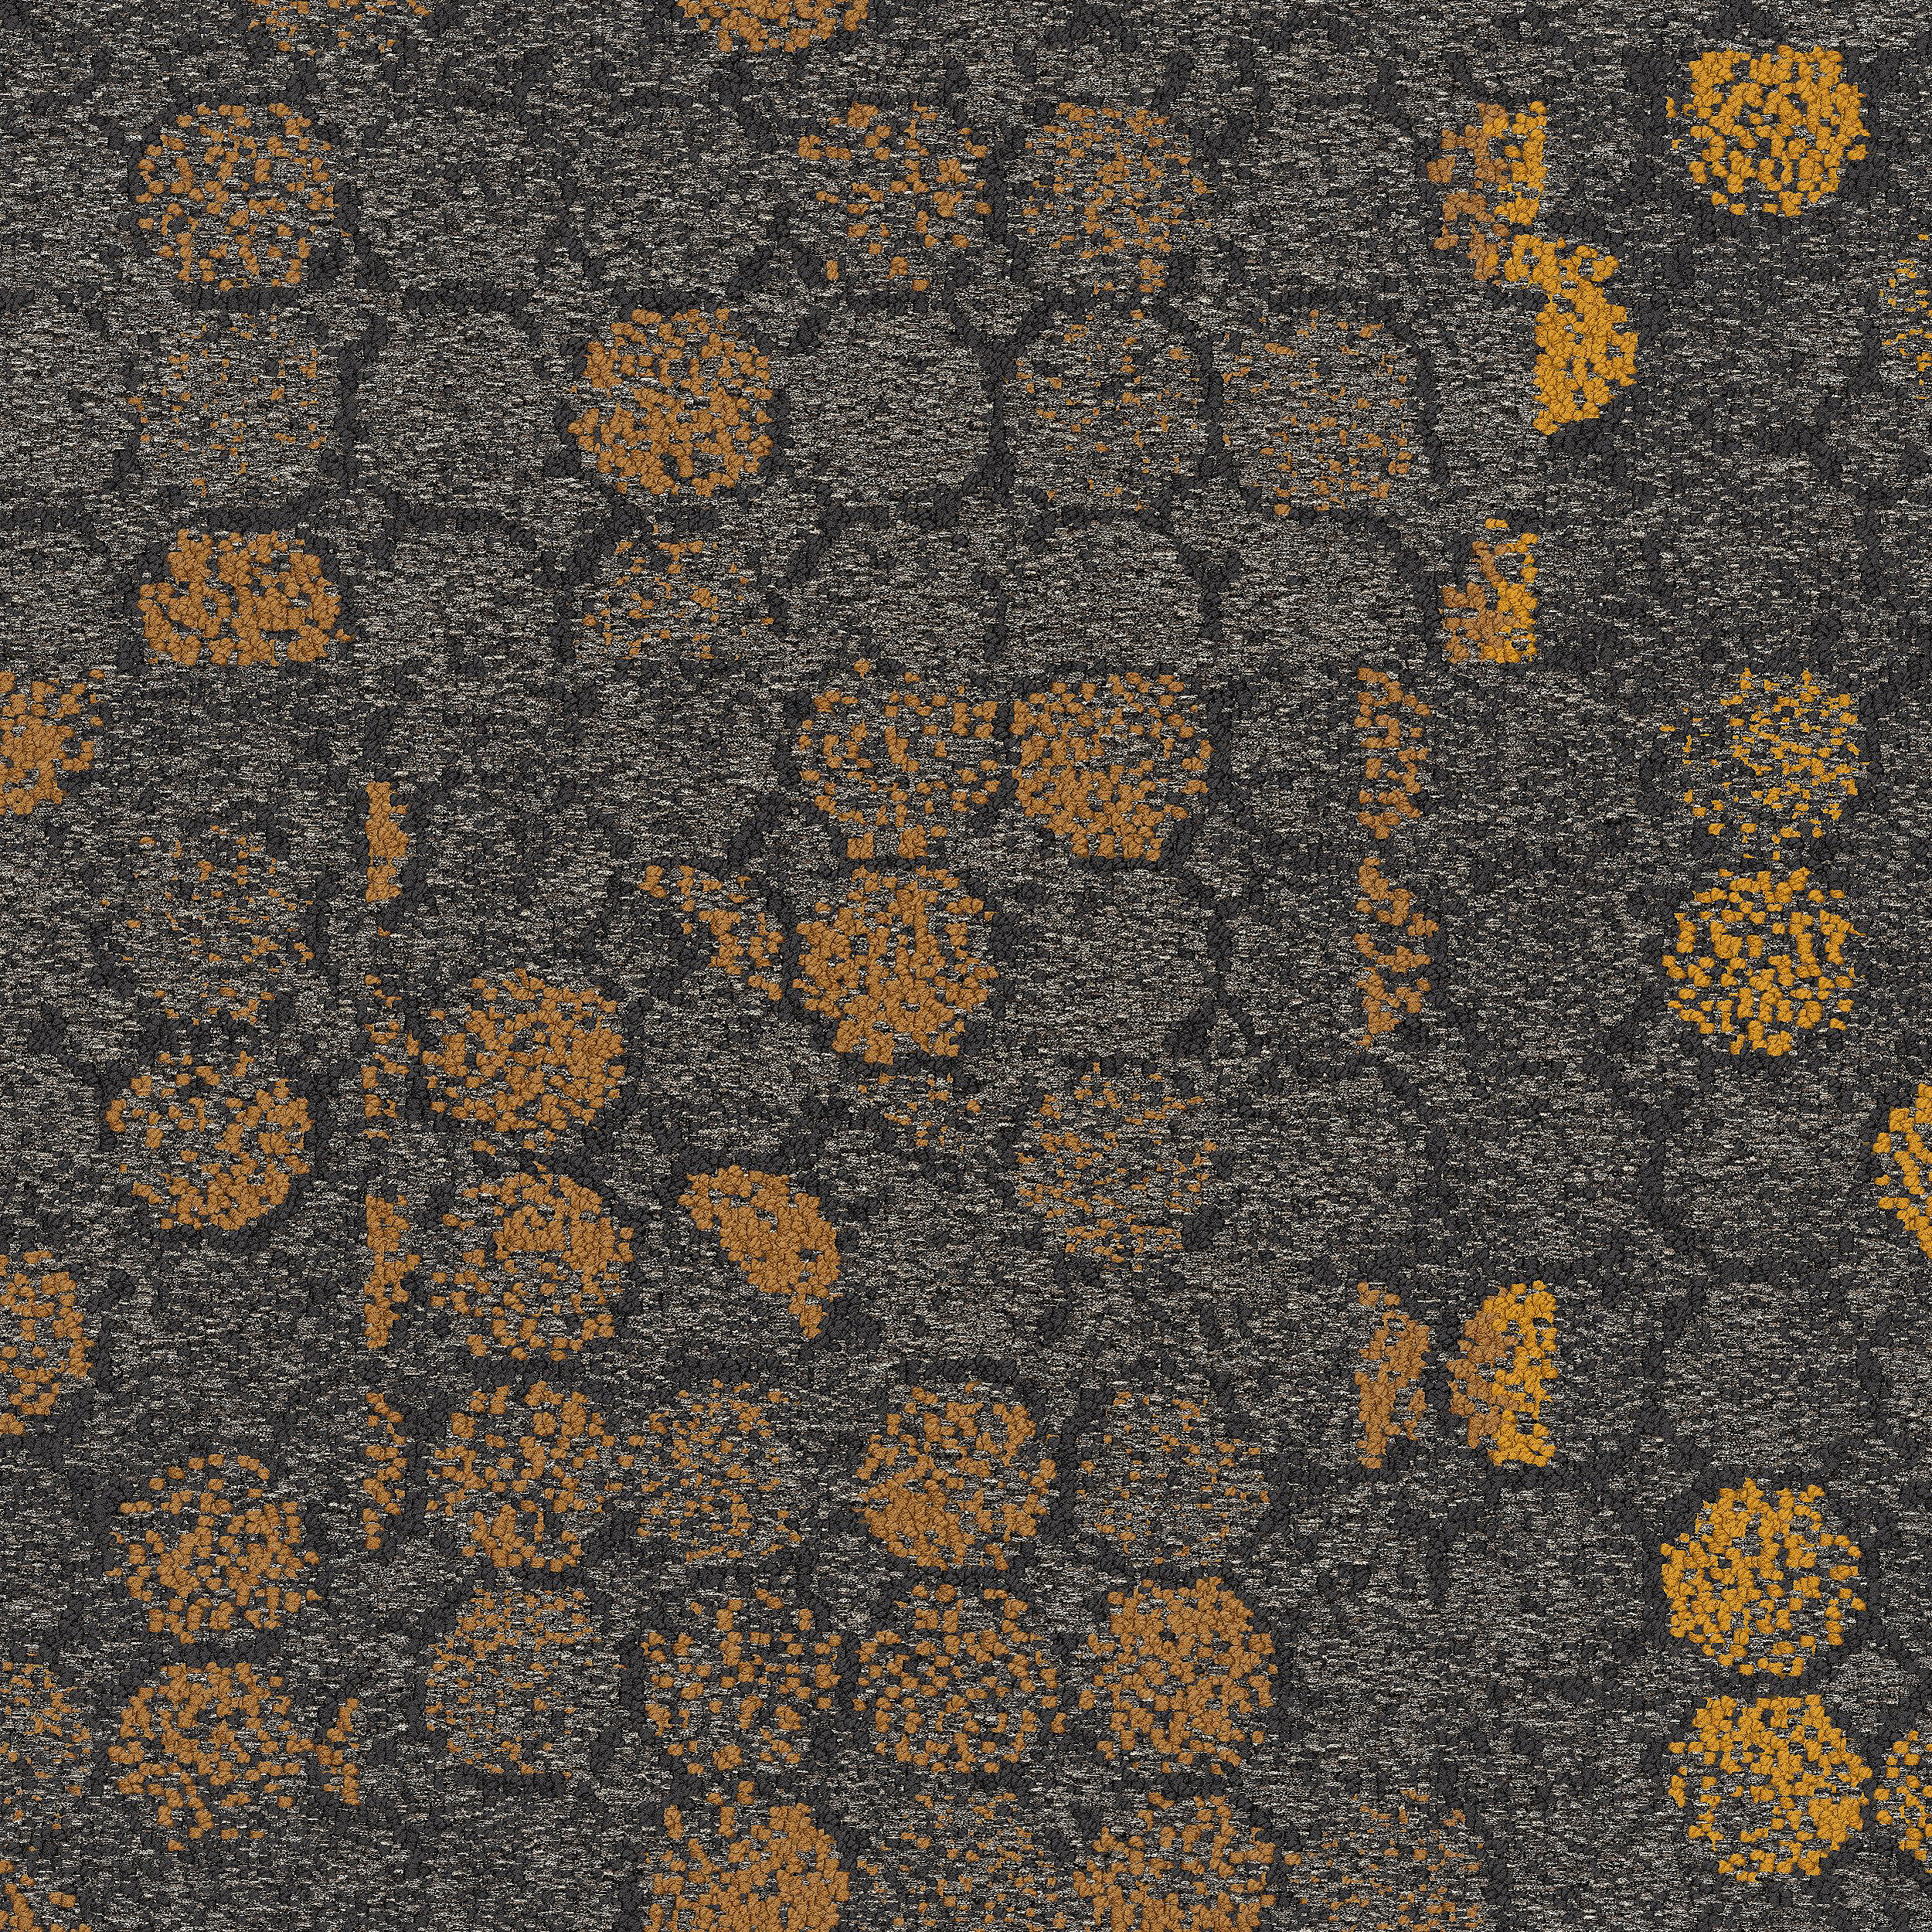 Broome Street Carpet Tile In Yellow Glass Bildnummer 13